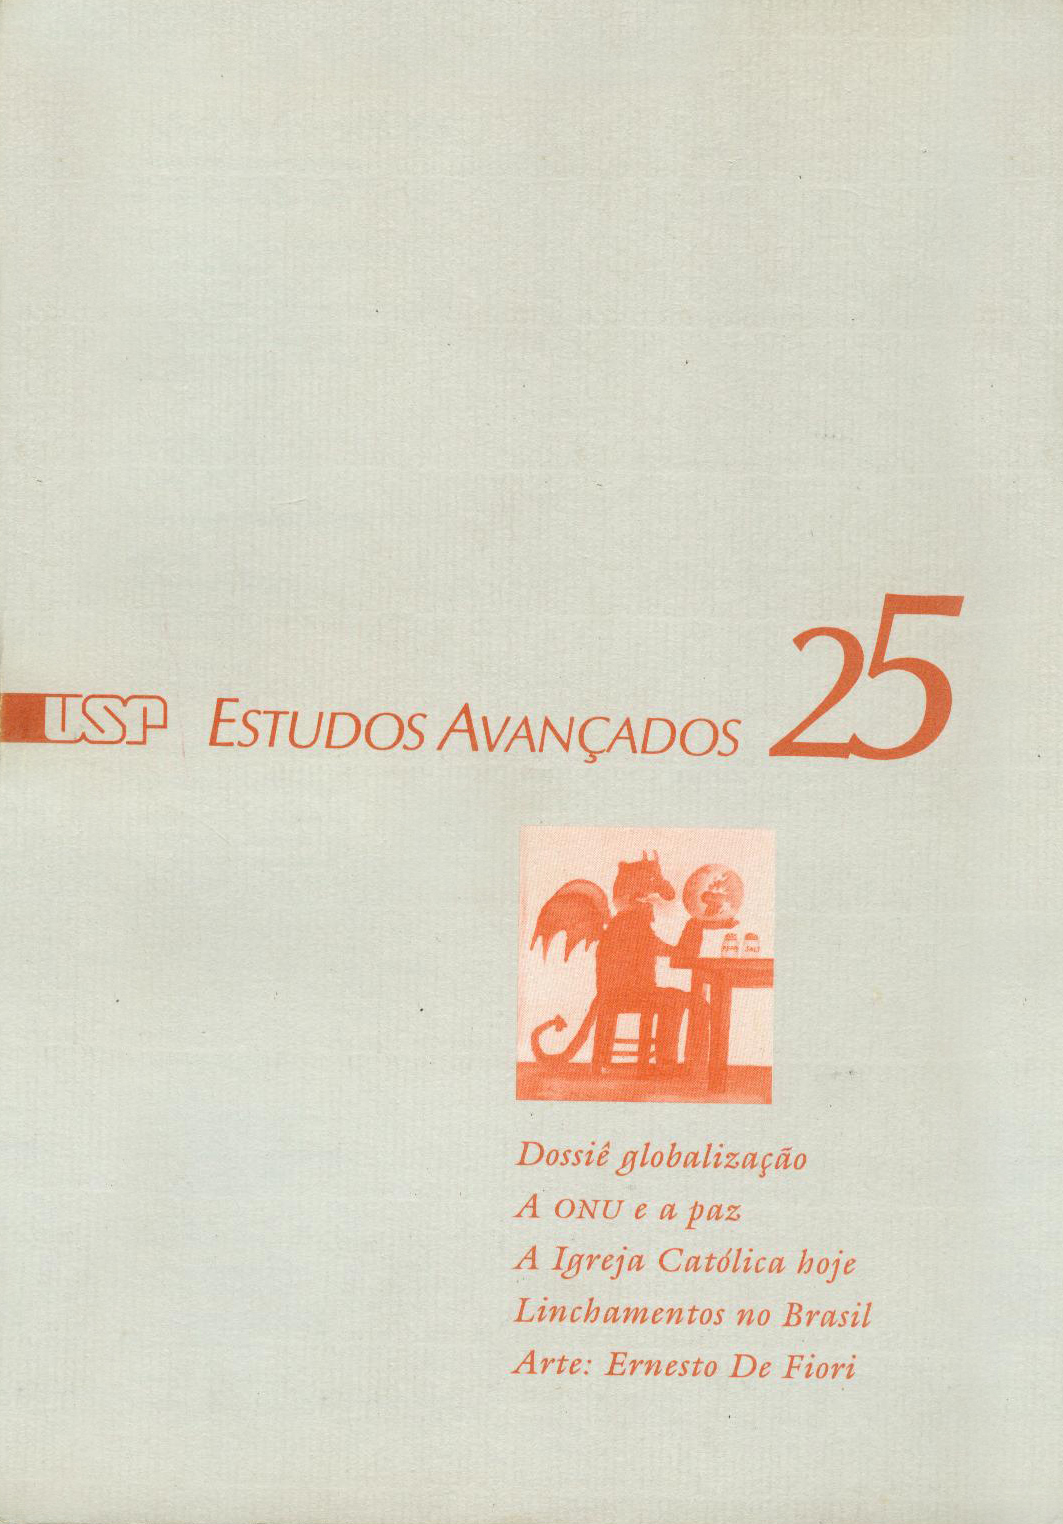 					View Vol. 9 No. 25 (1995)
				